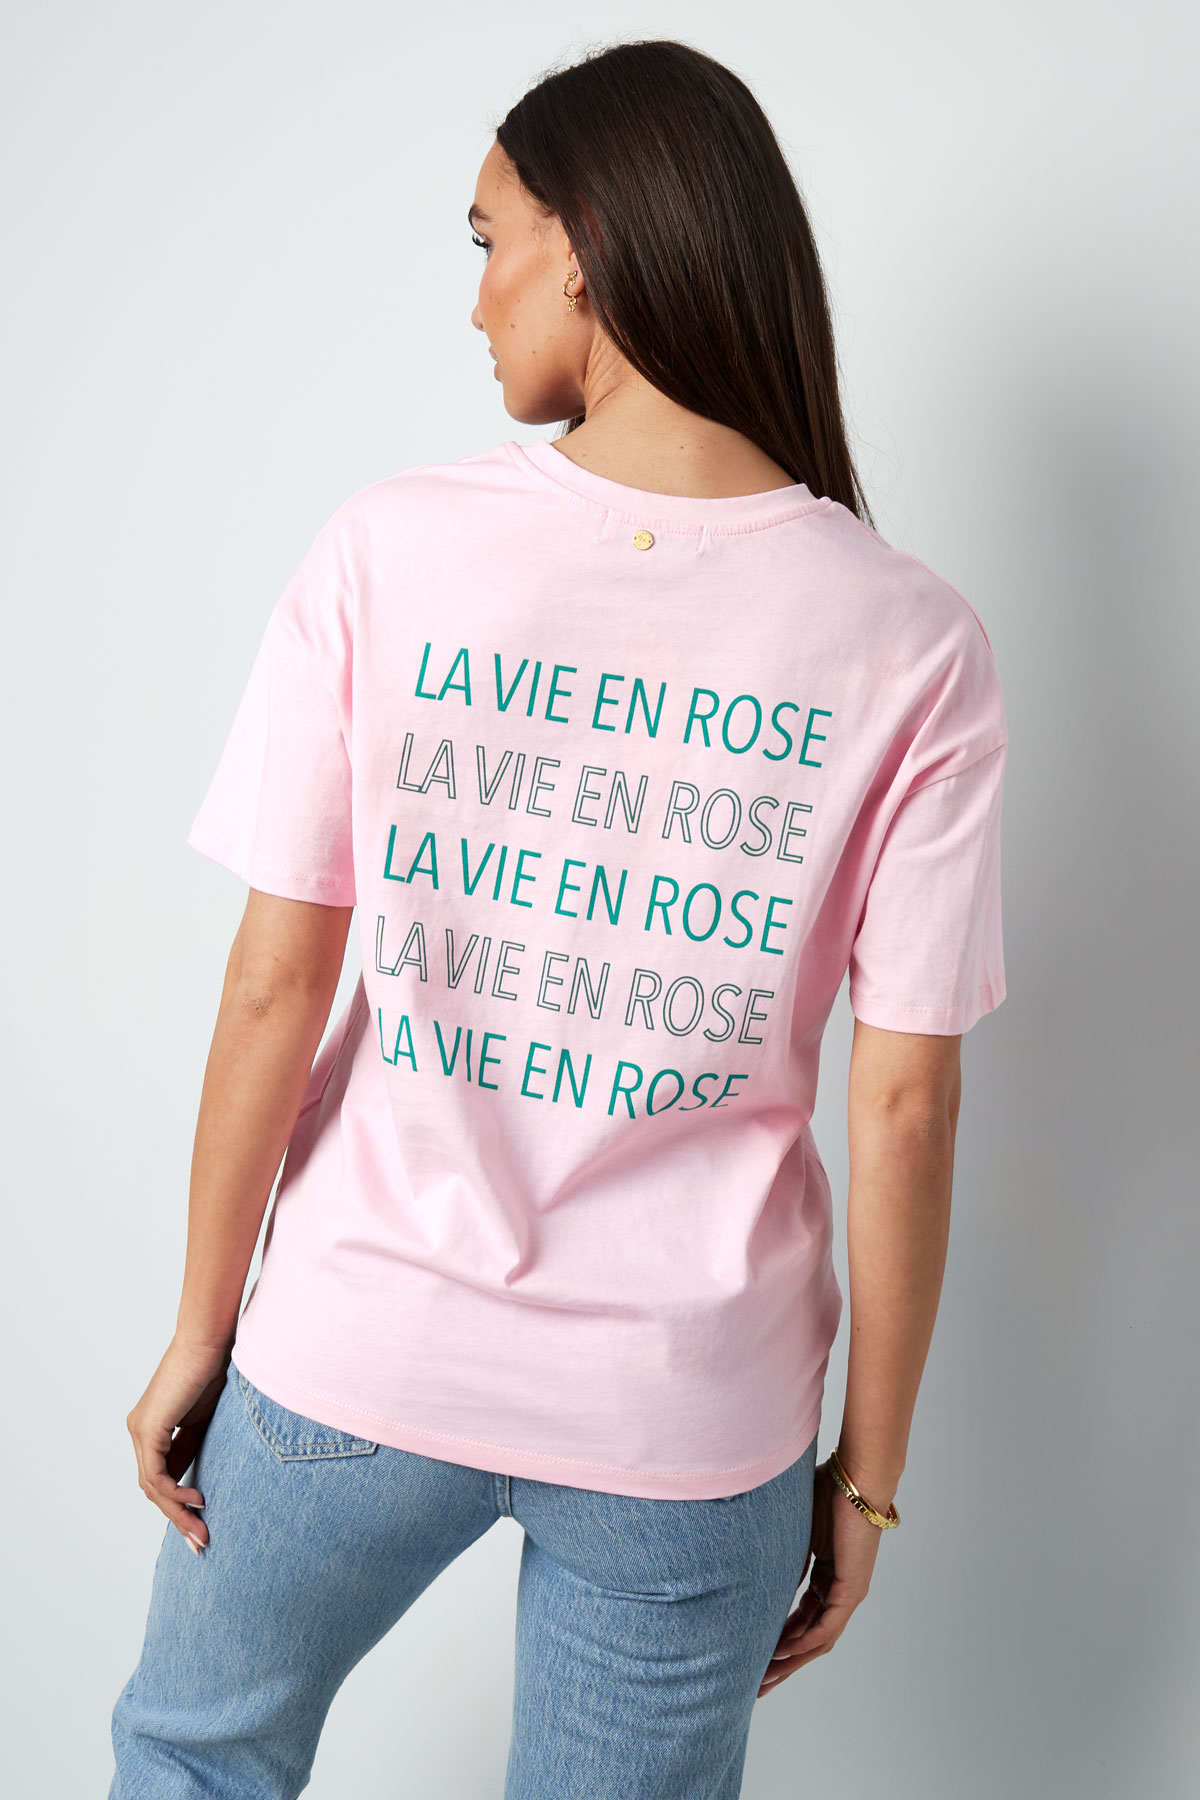 T-shirt la vie en rose - grigio scuro h5 Immagine7